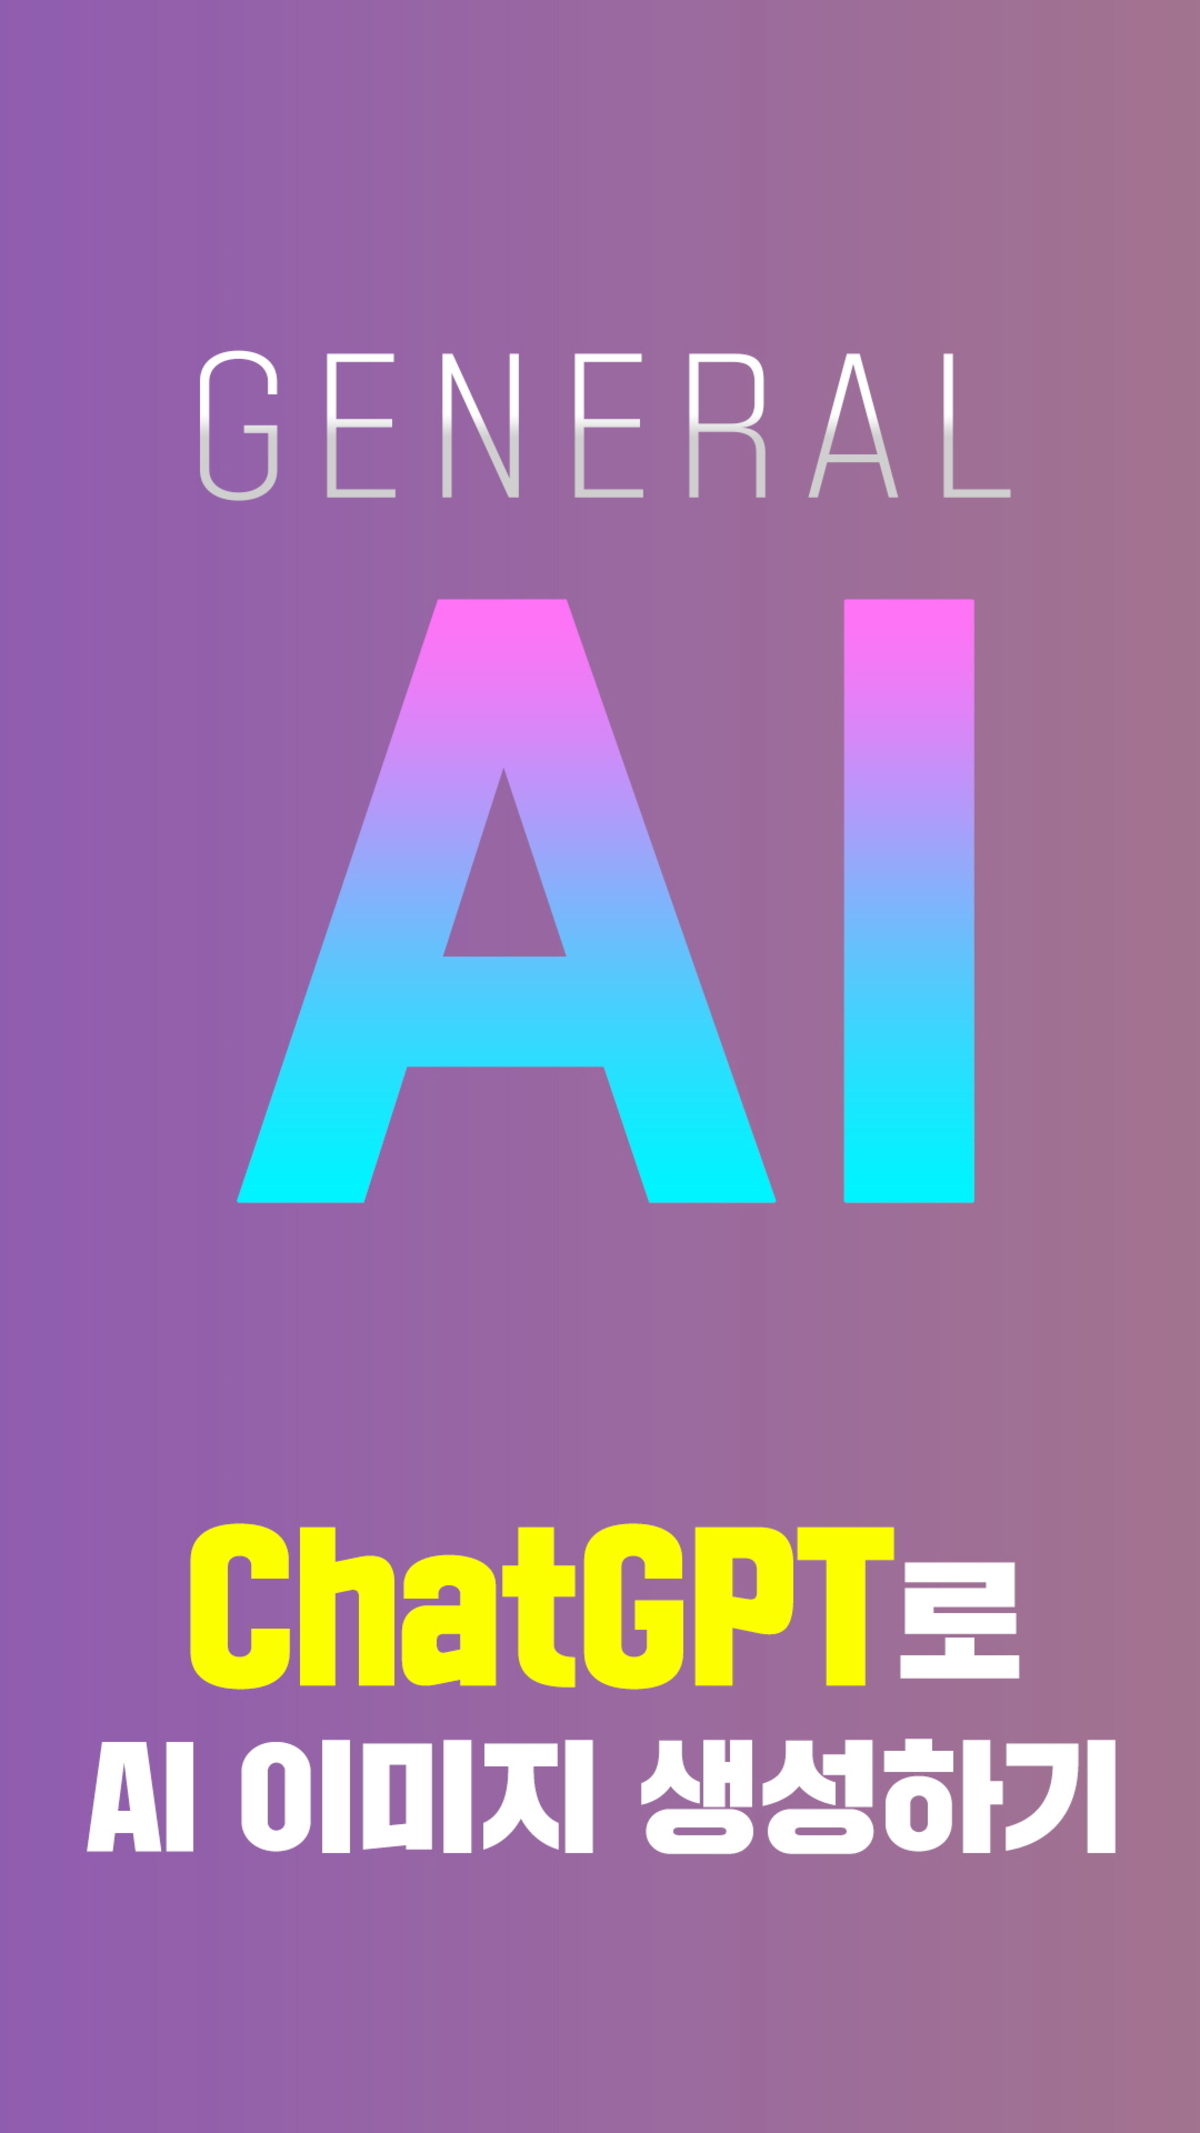 ChatGPT로 AI 이미지 생성하기